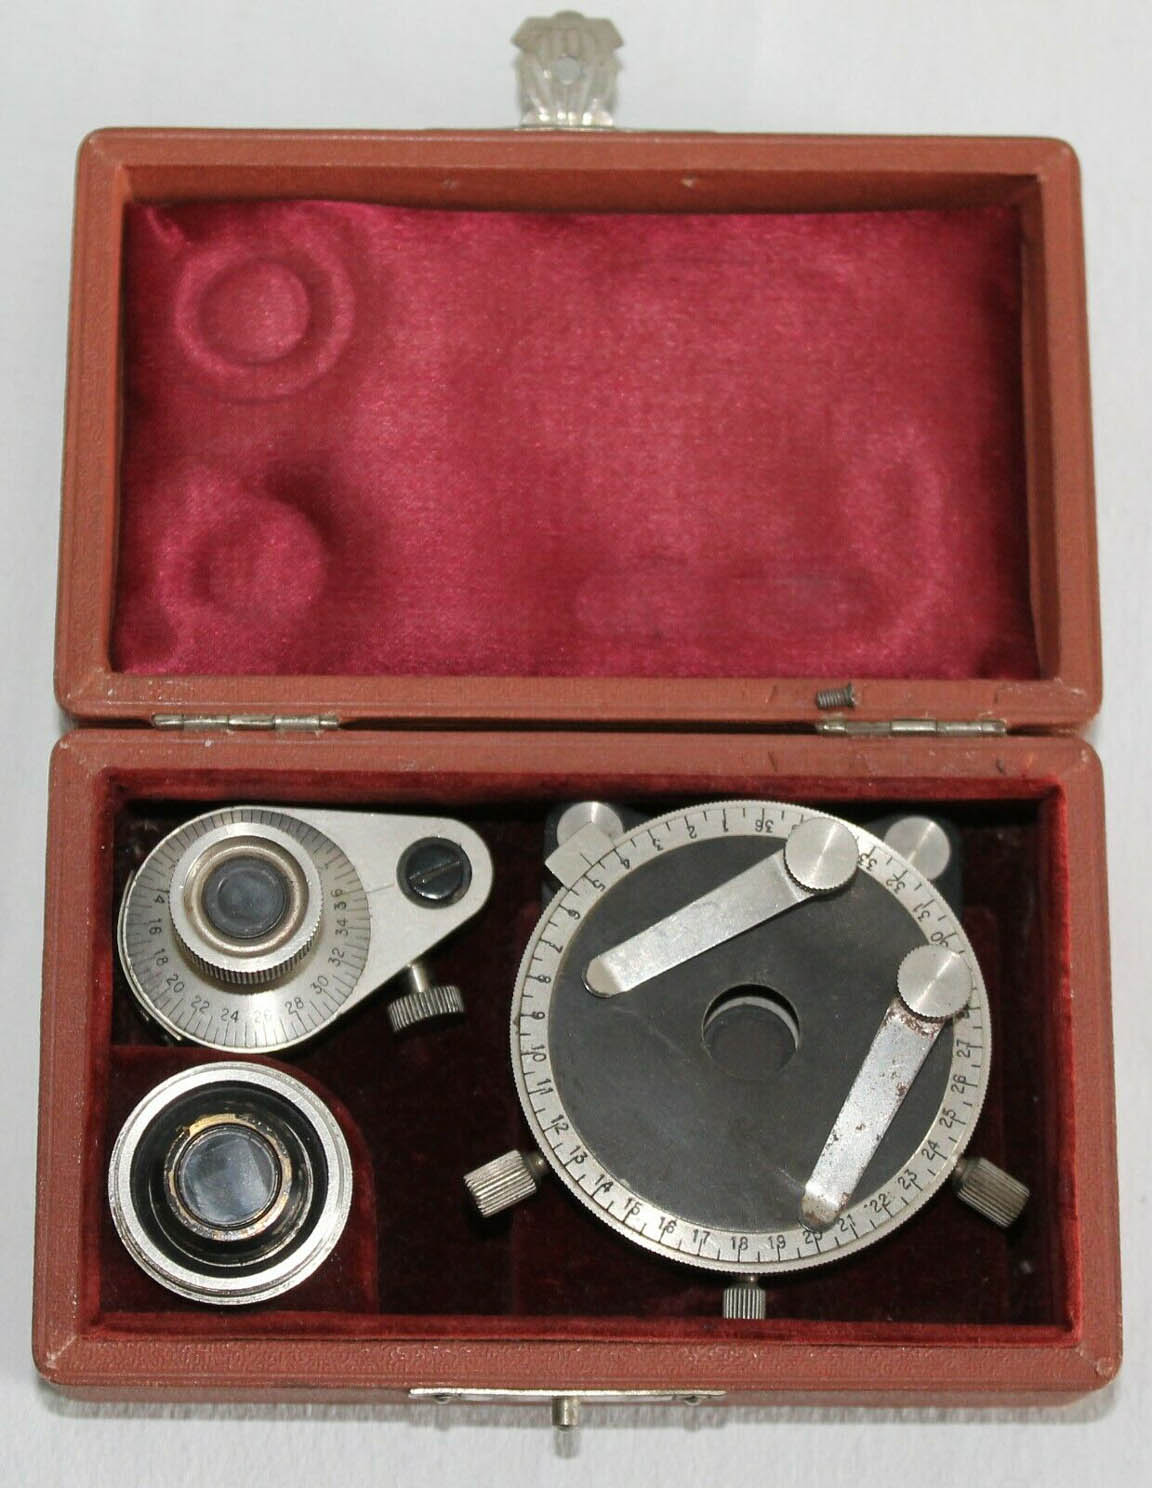 minor microscope